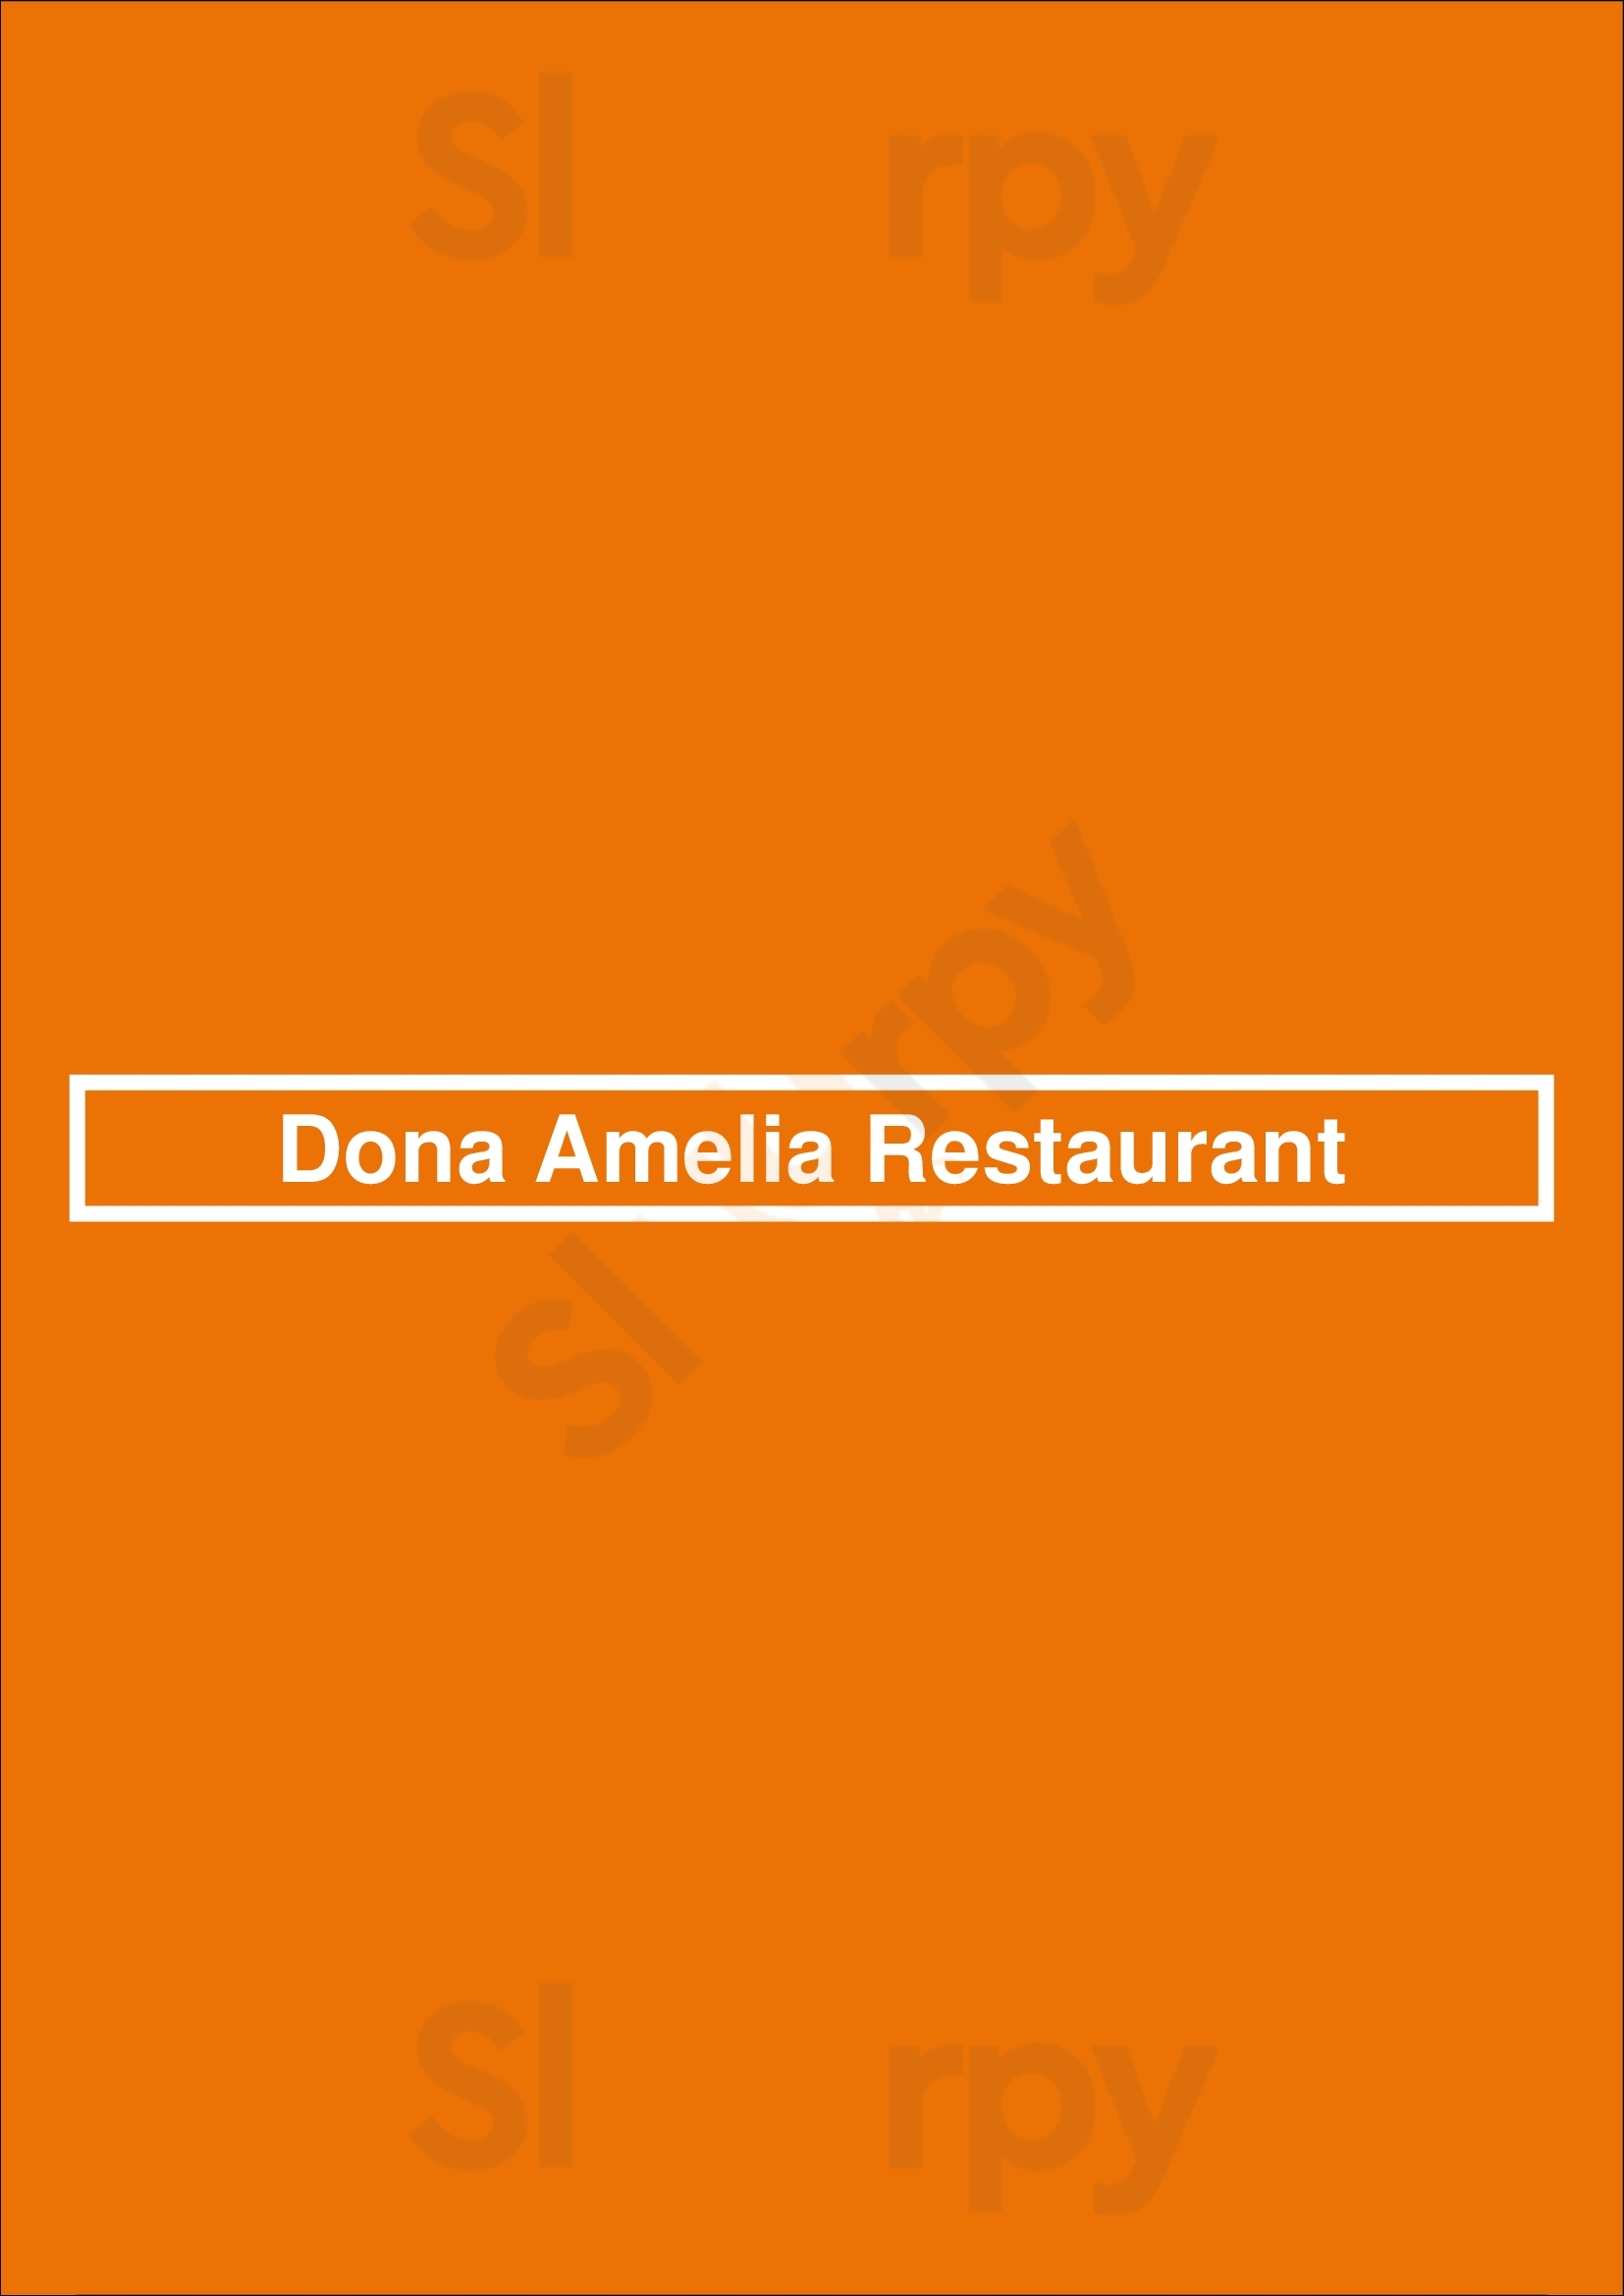 Dona Amelia Restaurant Funchal Menu - 1